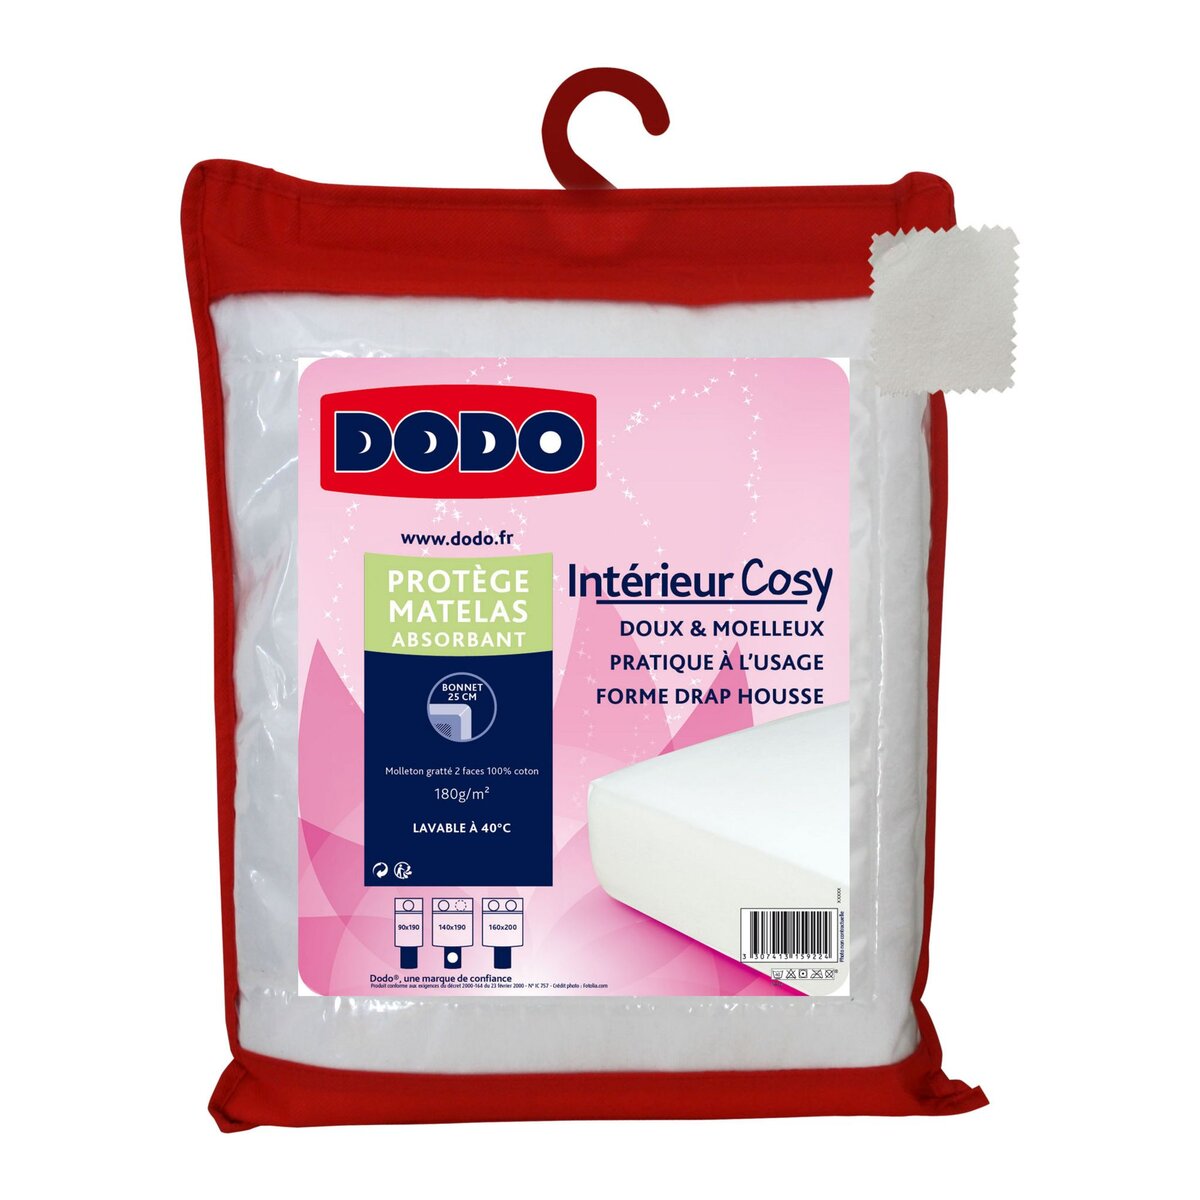 DODO Protège matelas en coton absorbant INTERIEUR COSY